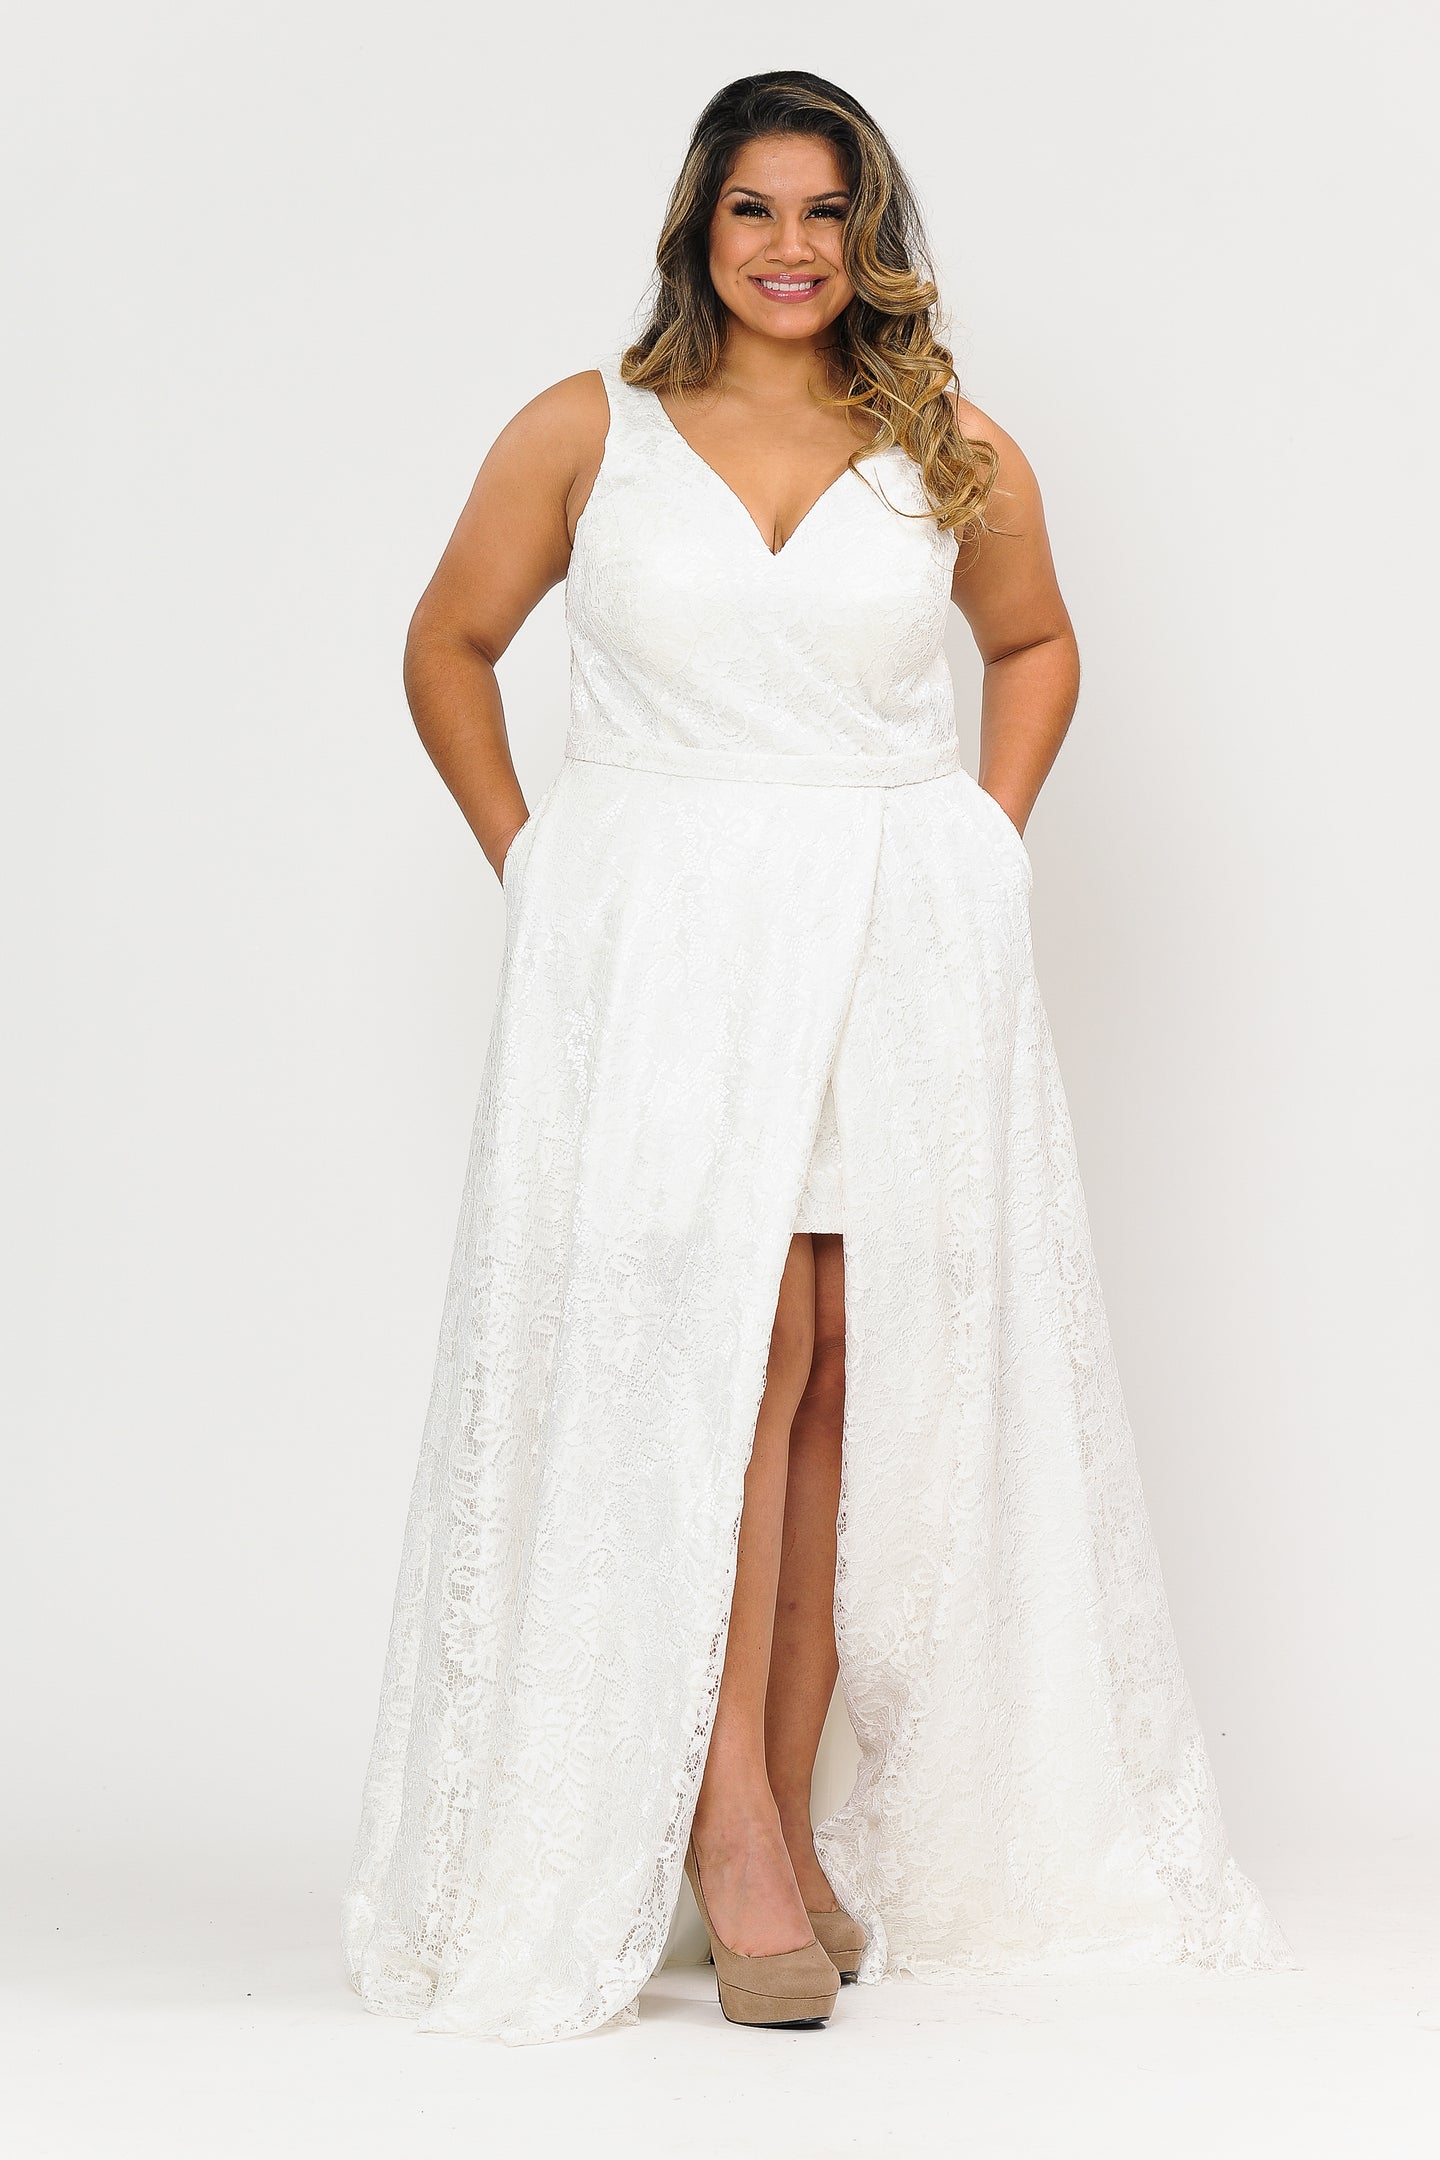 Wedding Plus Size Lace Dresses - LAYW1020B